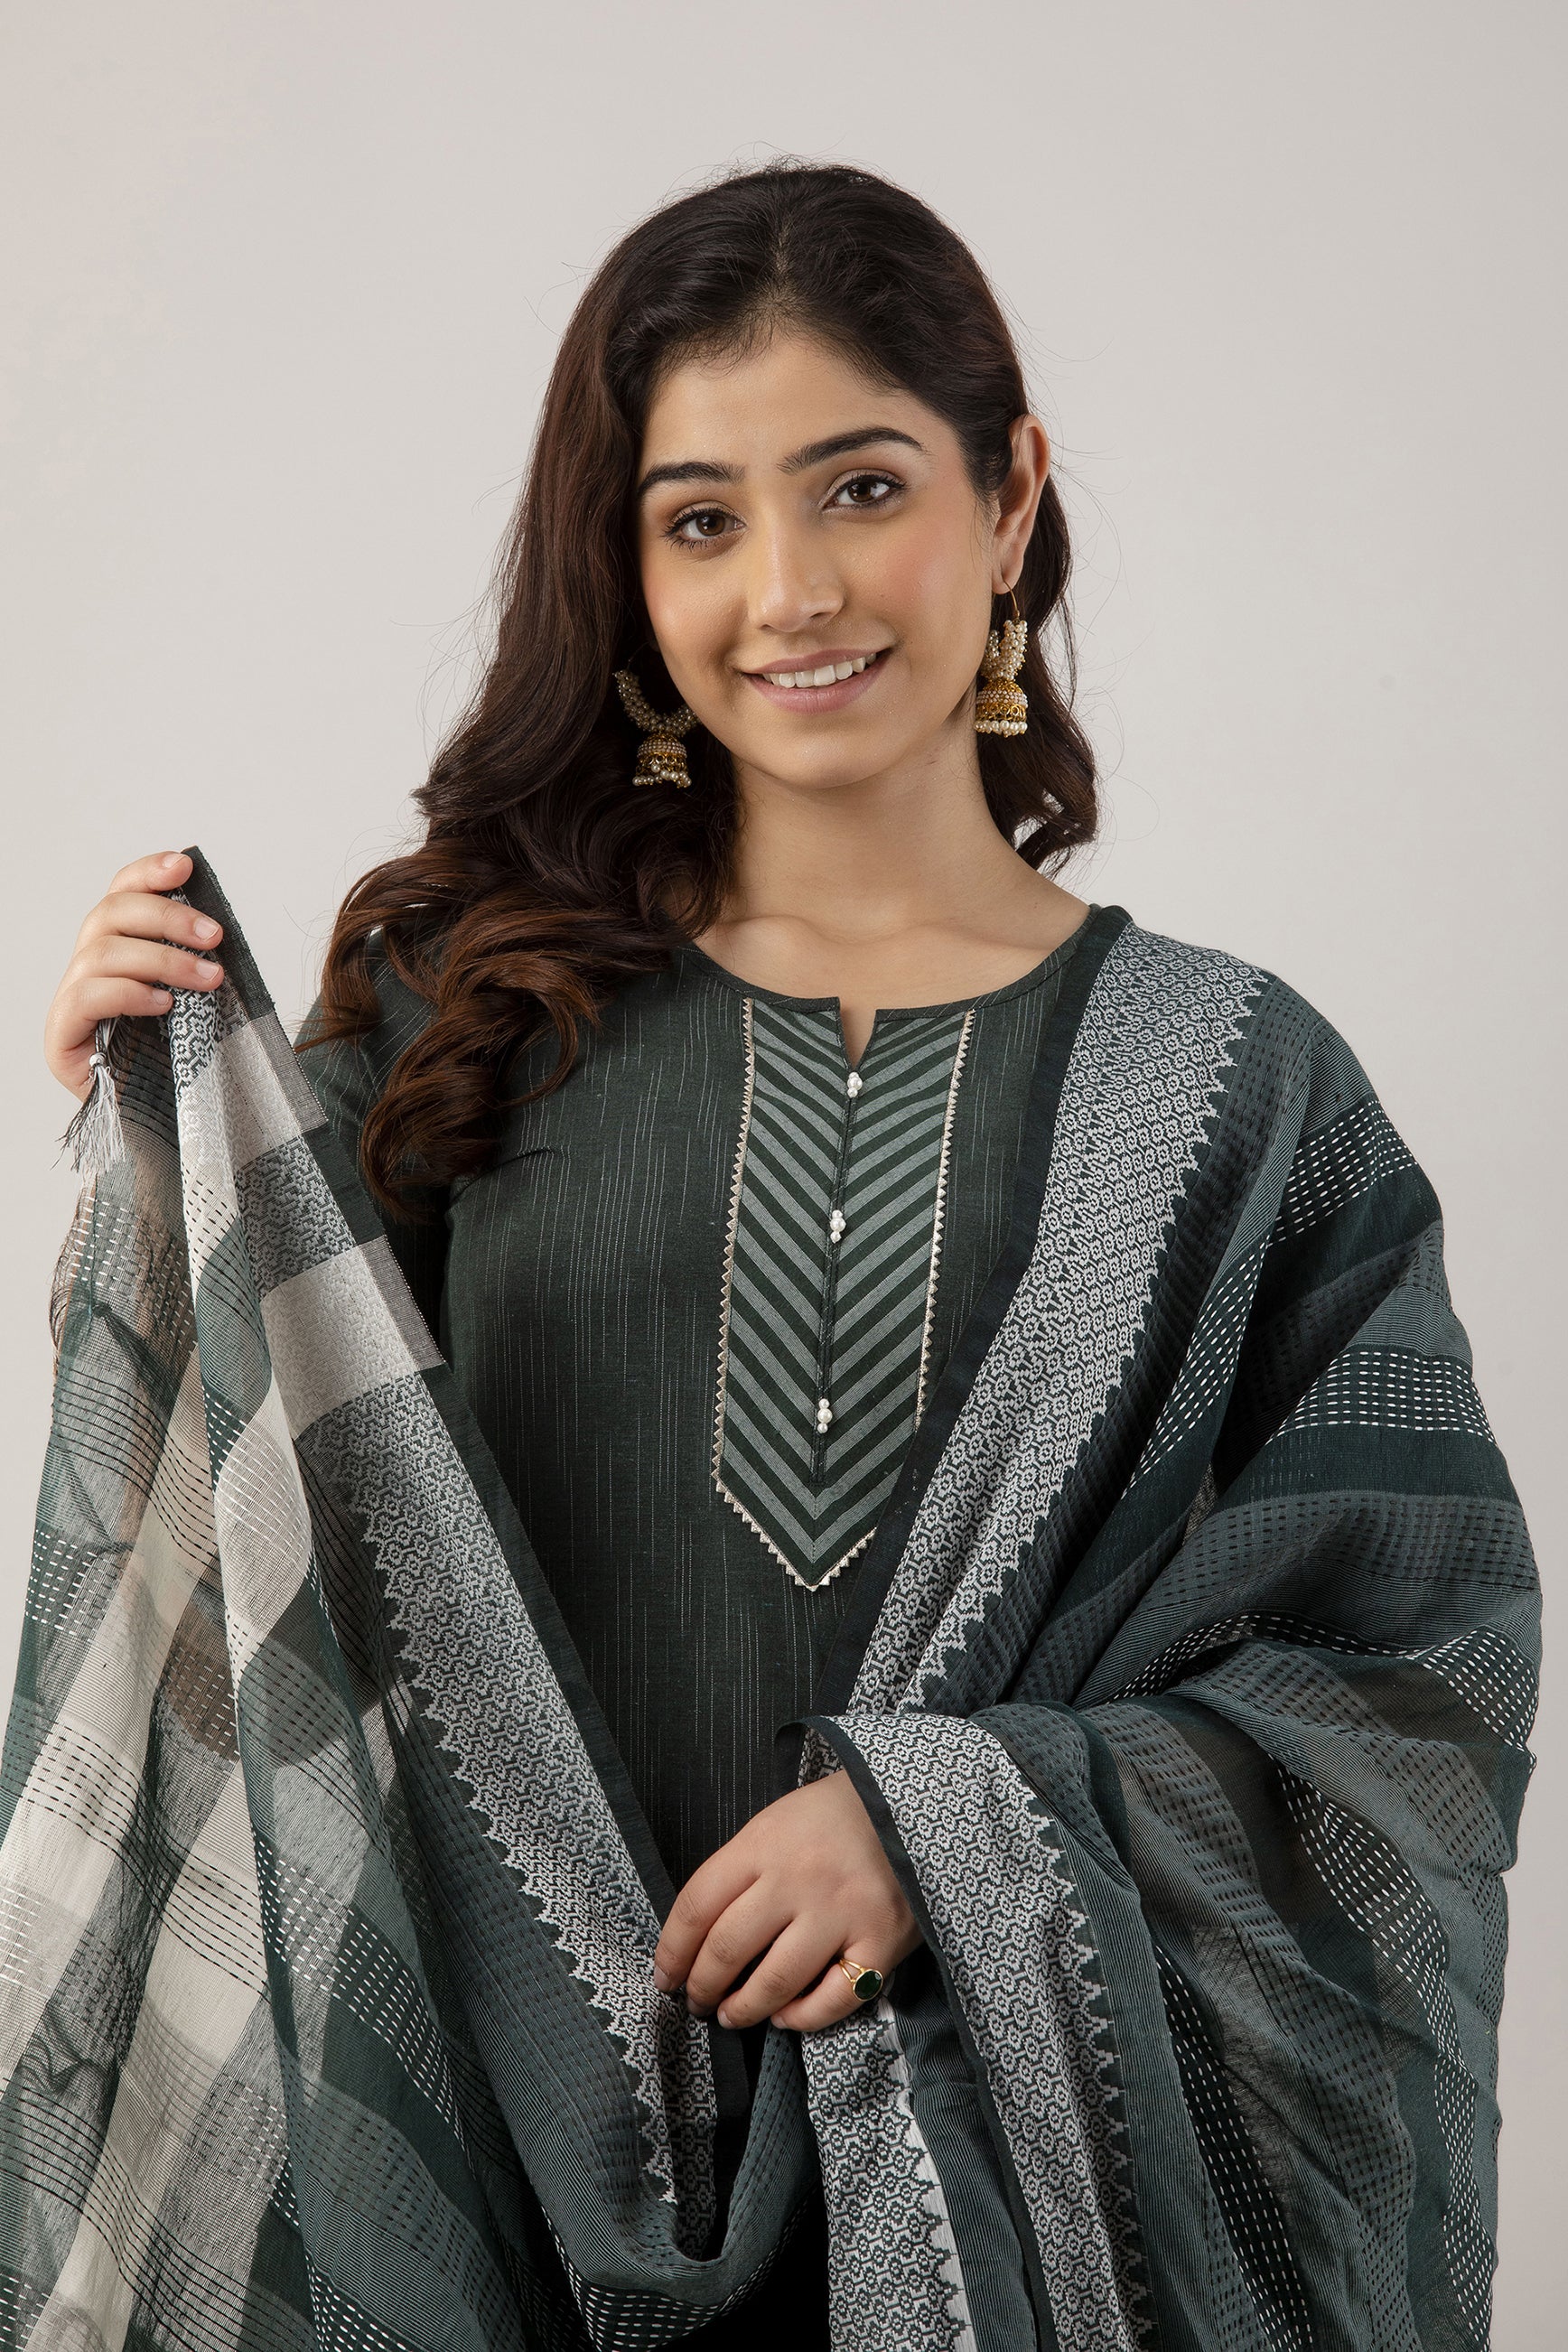 Women's Woven & Striped Cotton Blend Straight Kurta Pant & Dupatta Set (Bottle Green) - Charu